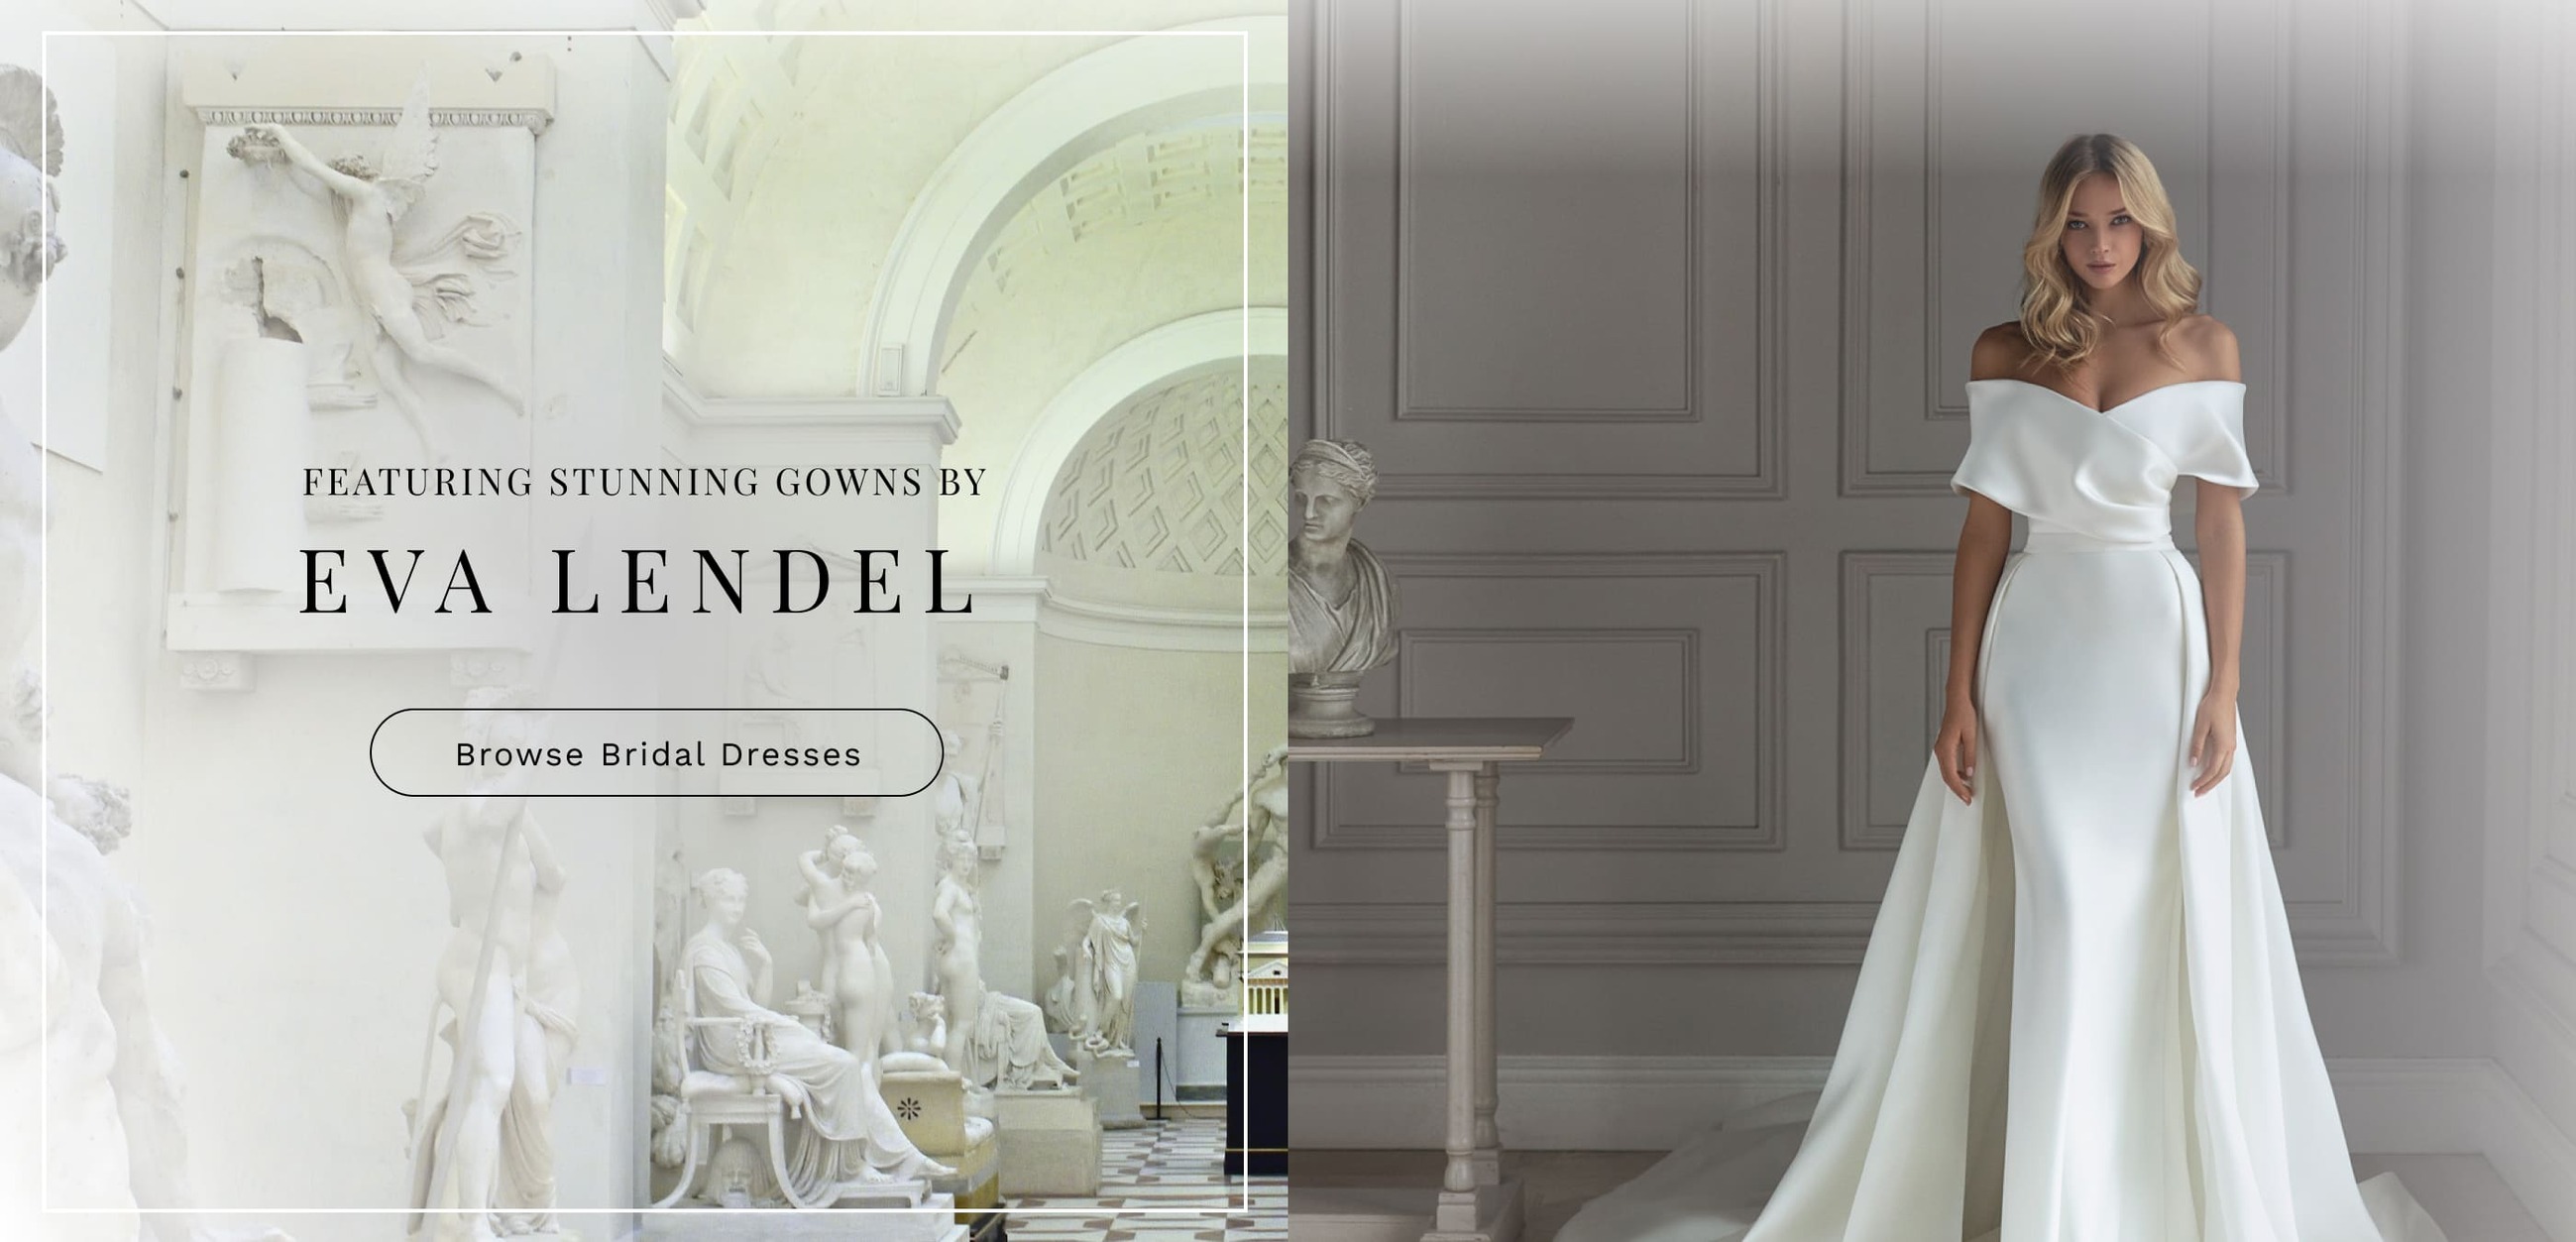 Allure Bridals Wedding Dresses - Wendy's Bridal Cincinnati -